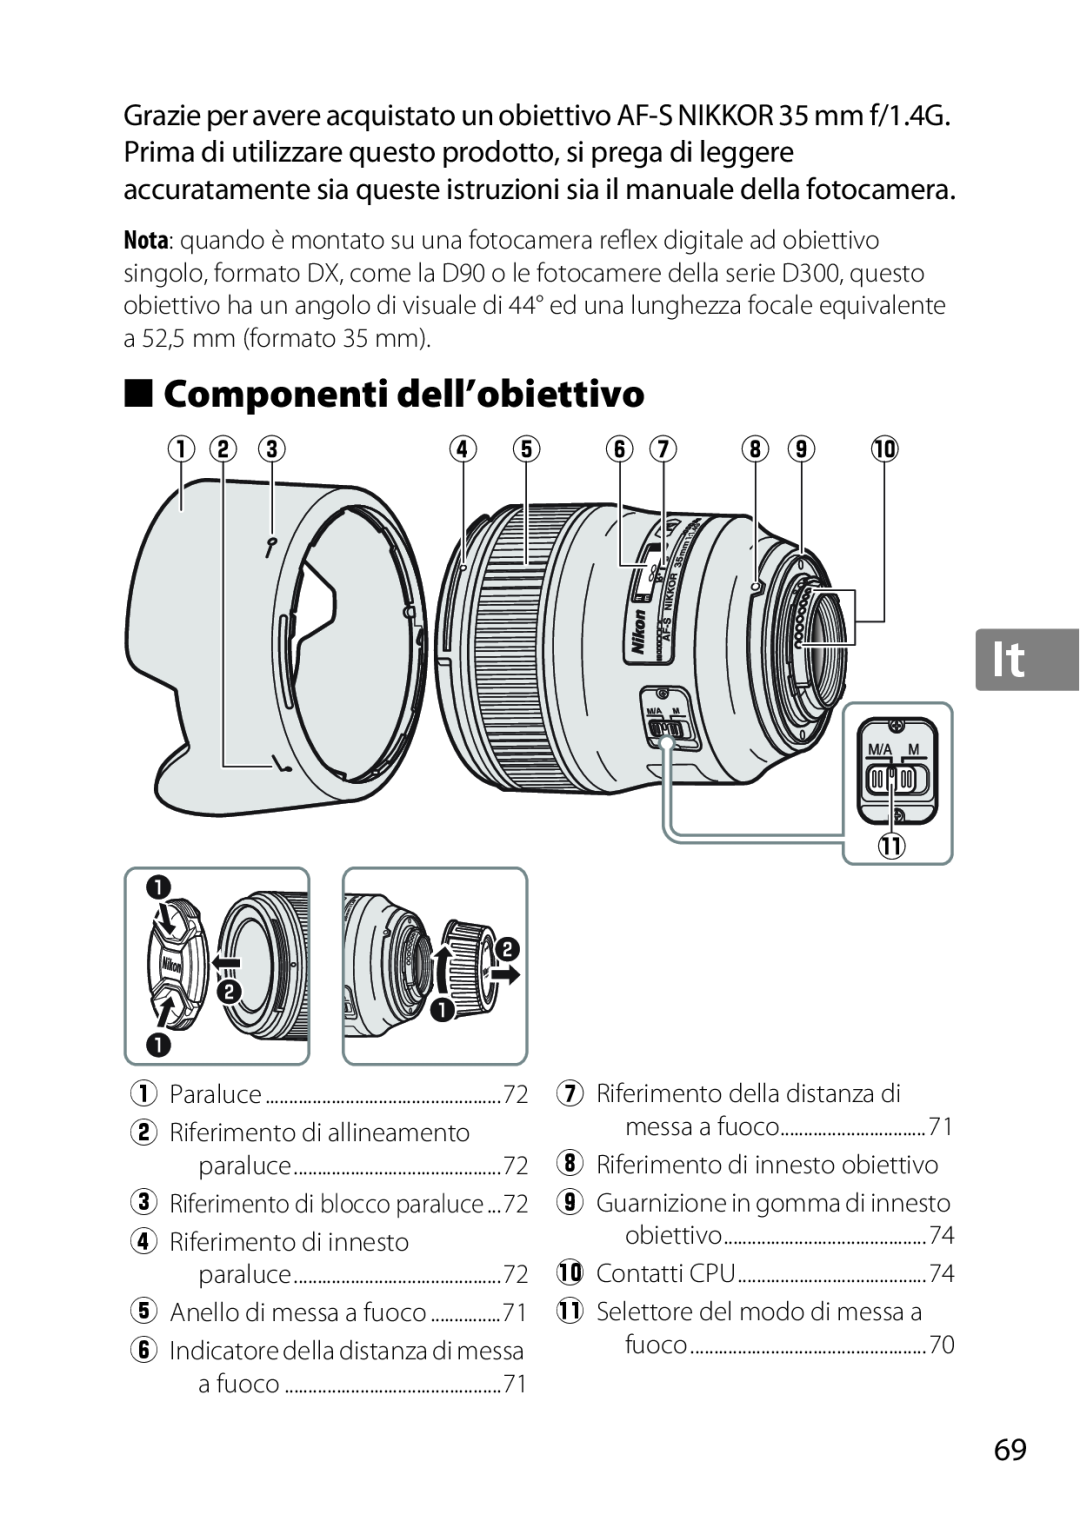 Nikon 35mmf14G, AF-S, 35mm f/1.4G, 2198 user manual Componenti dell’obiettivo, q w e, r t y u i o !0 